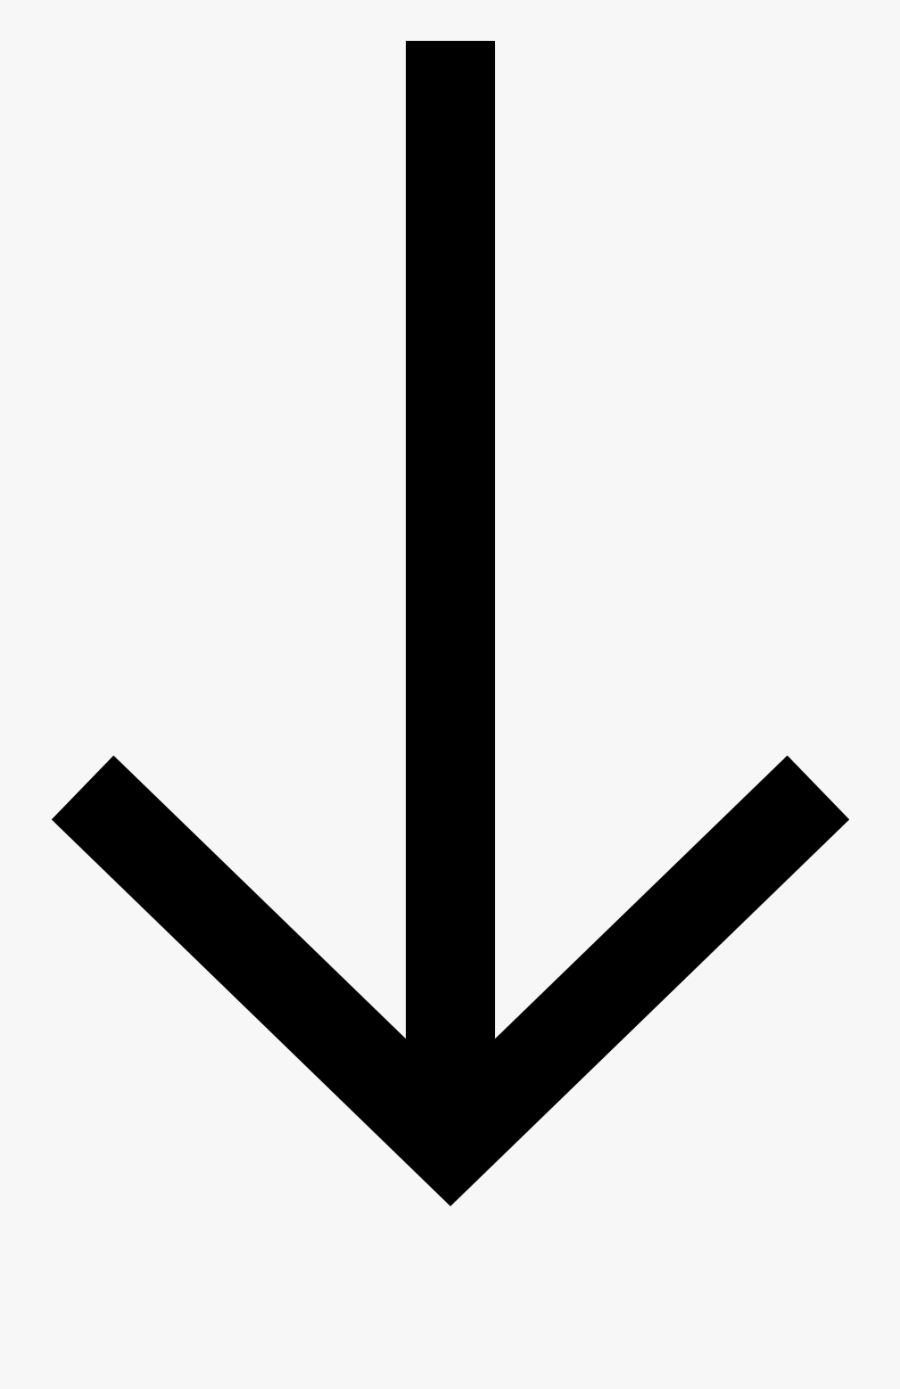 Transparent Rustic Arrow Clipart - Arrow Pointing Down Png, Transparent Clipart